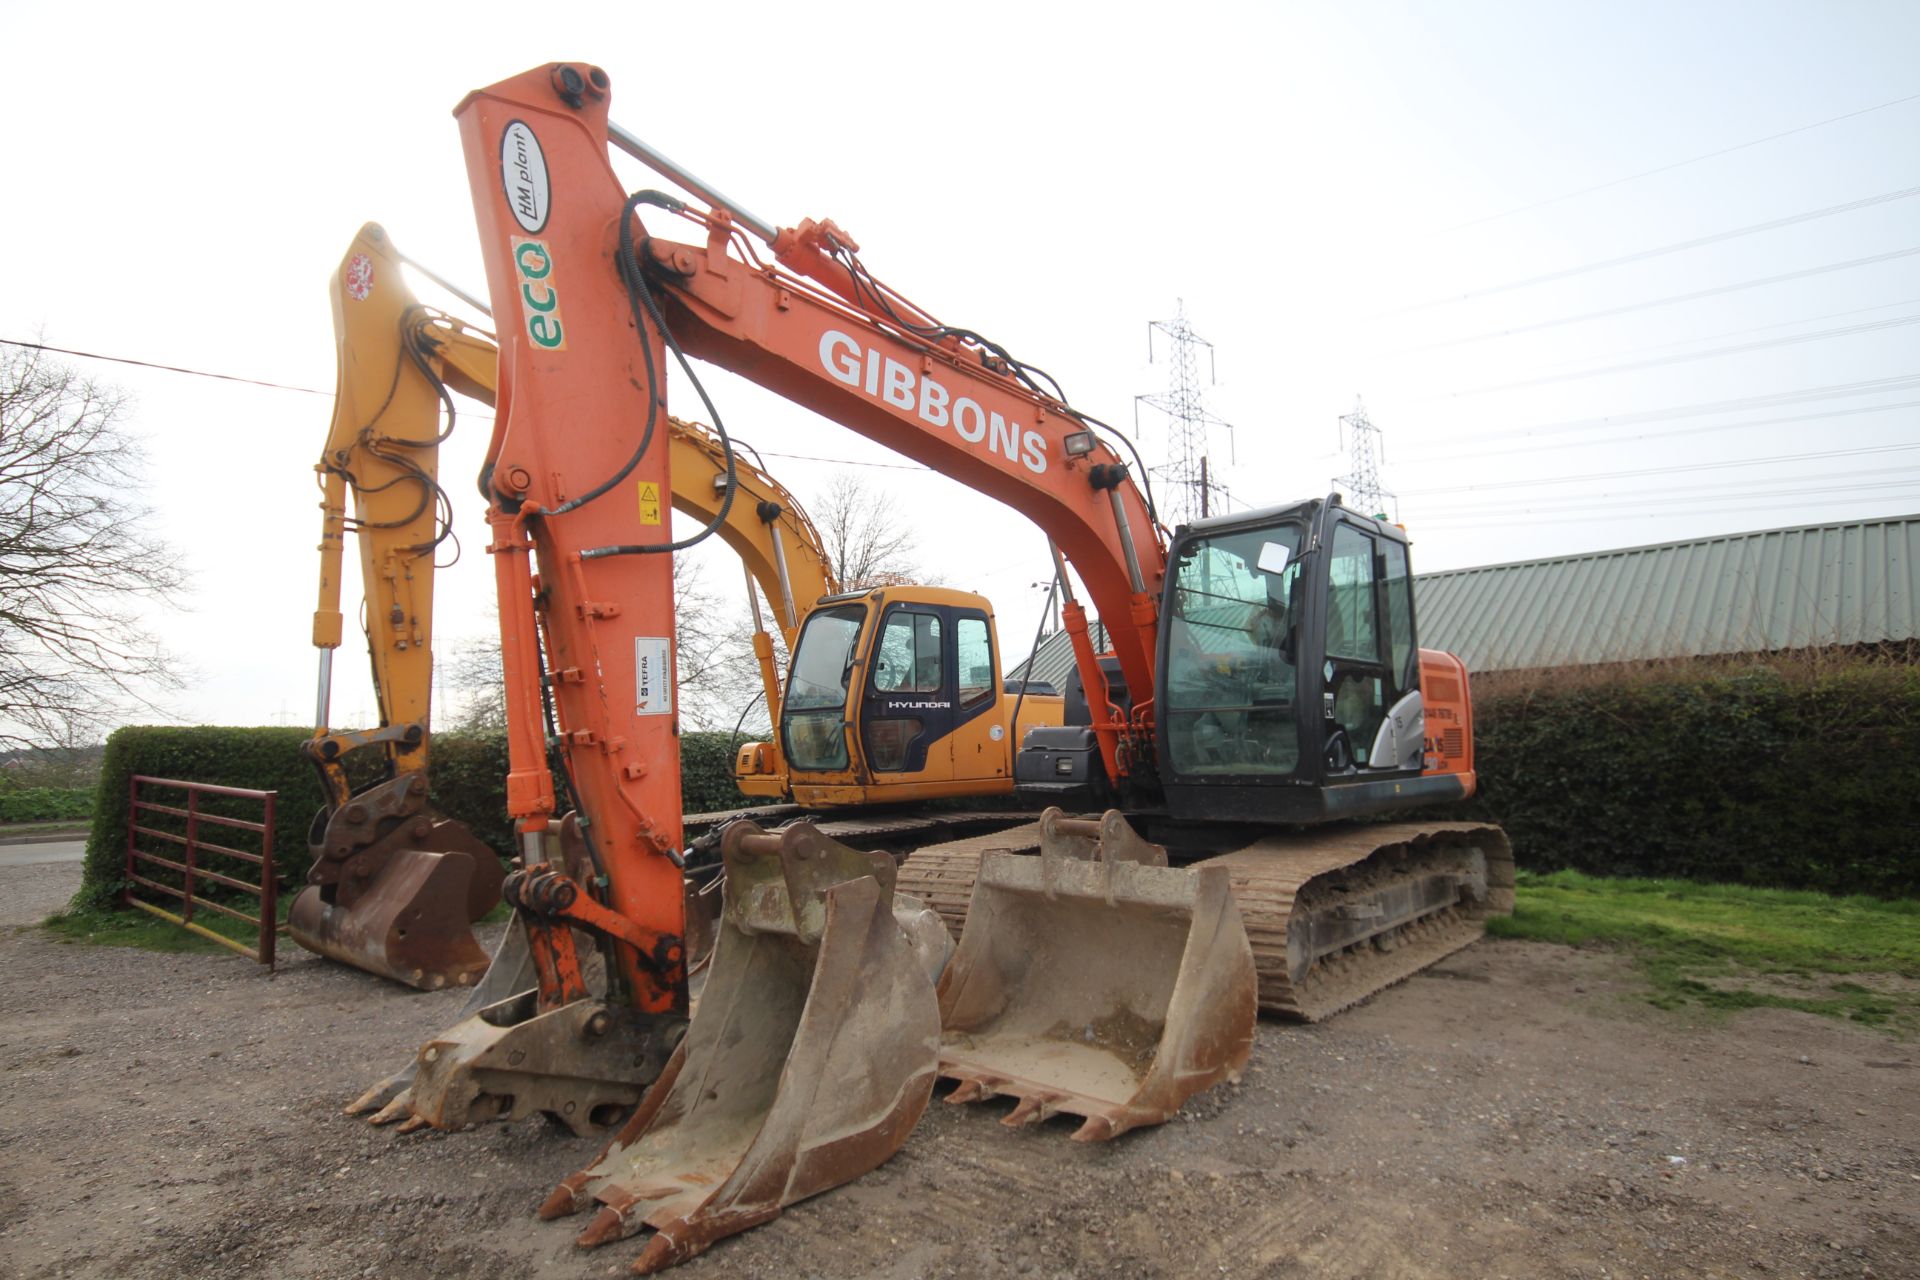 Hitachi Z-Axis 130-5 LCN 5B 14T steel track excavator. 2013. 8,122 hours. Serial number - Image 2 of 70